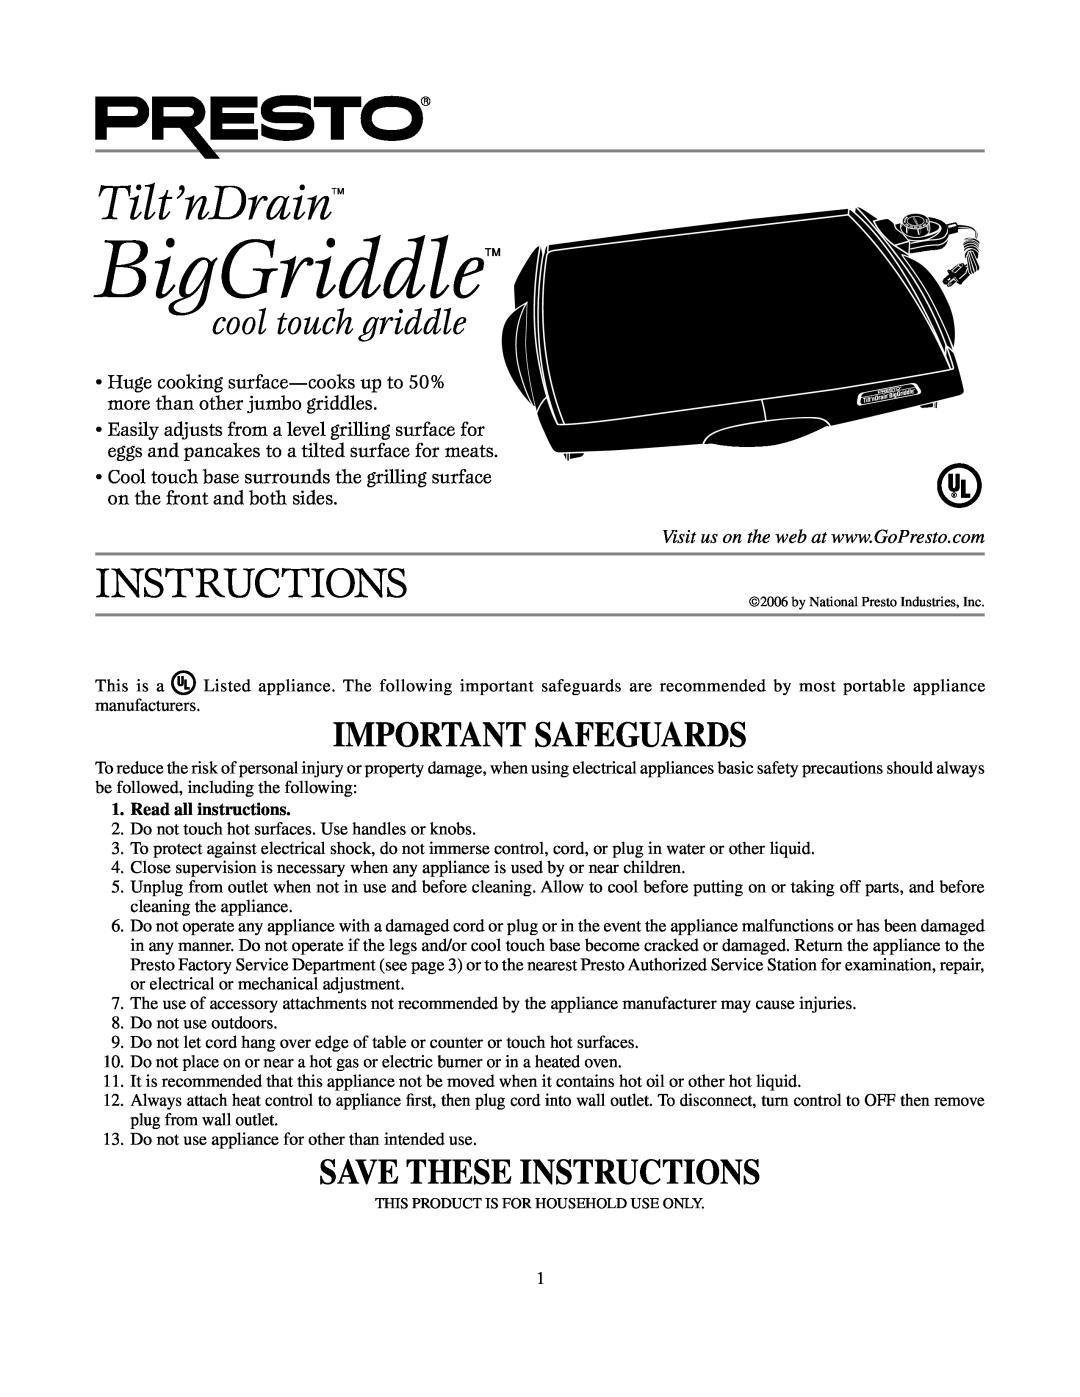 Presto BigGriddle cooltouchgriddle manual BigGriddle, Tilt’nDrain, Instructions, cool touch griddle 